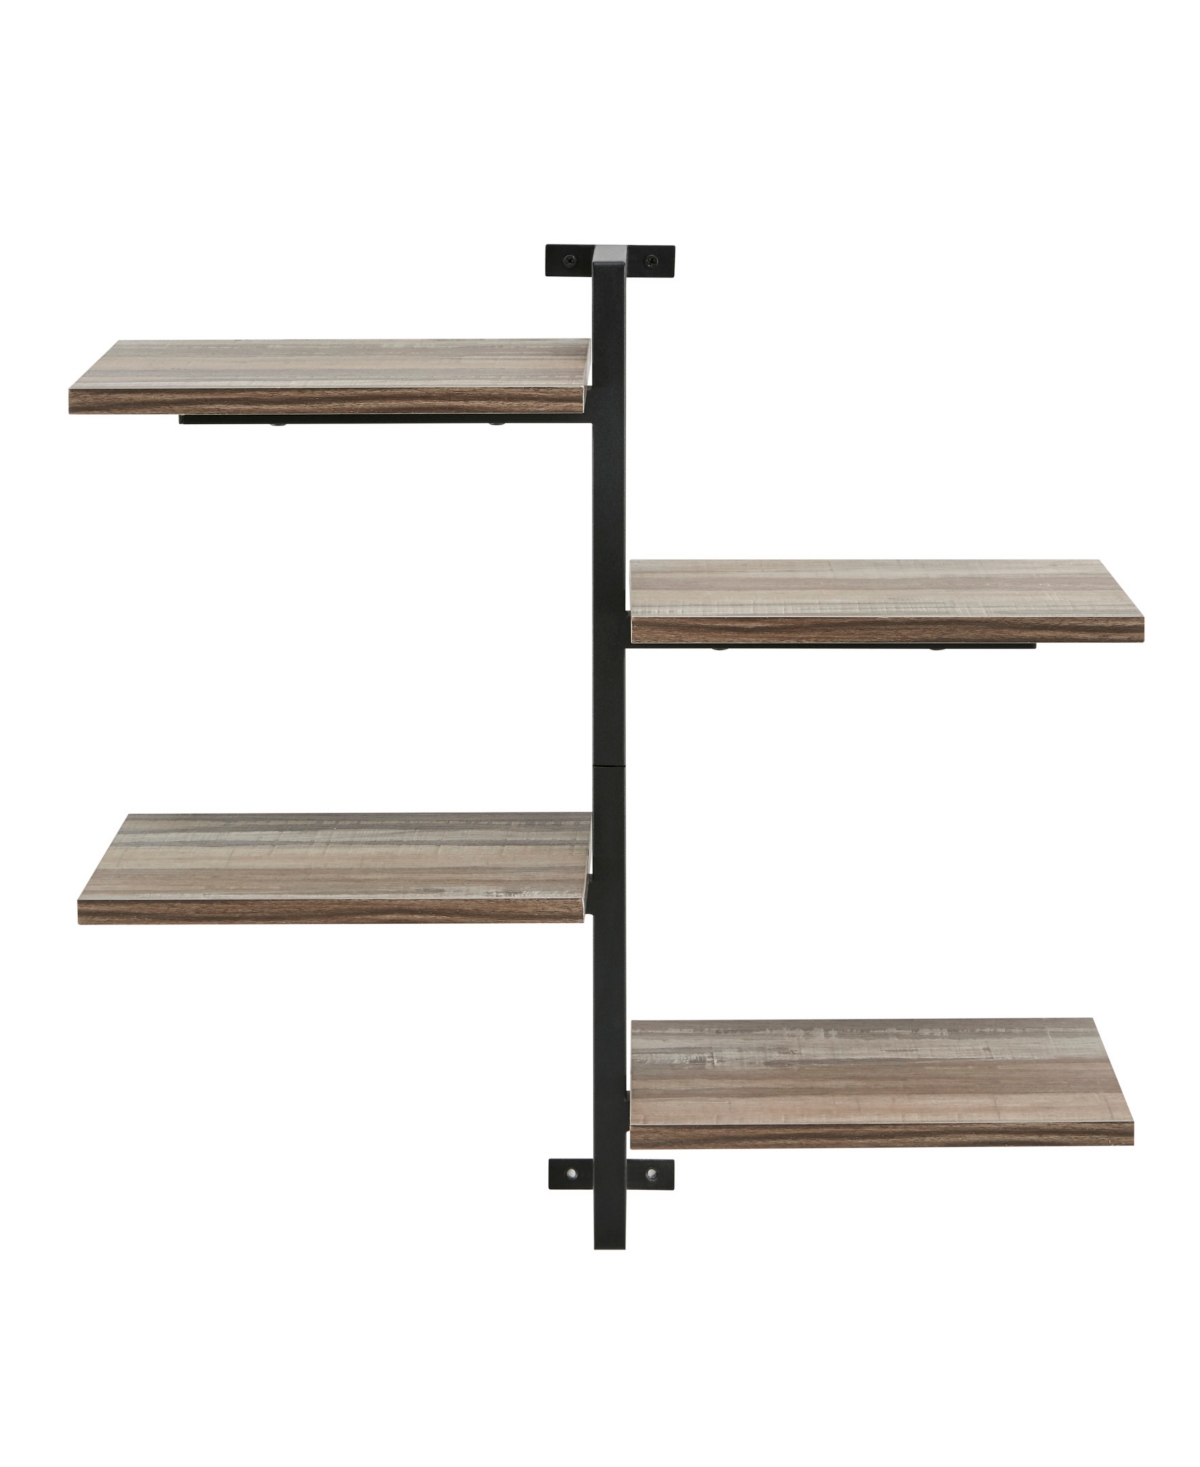 Siena Vertical Shelf Unit - Brown, Black